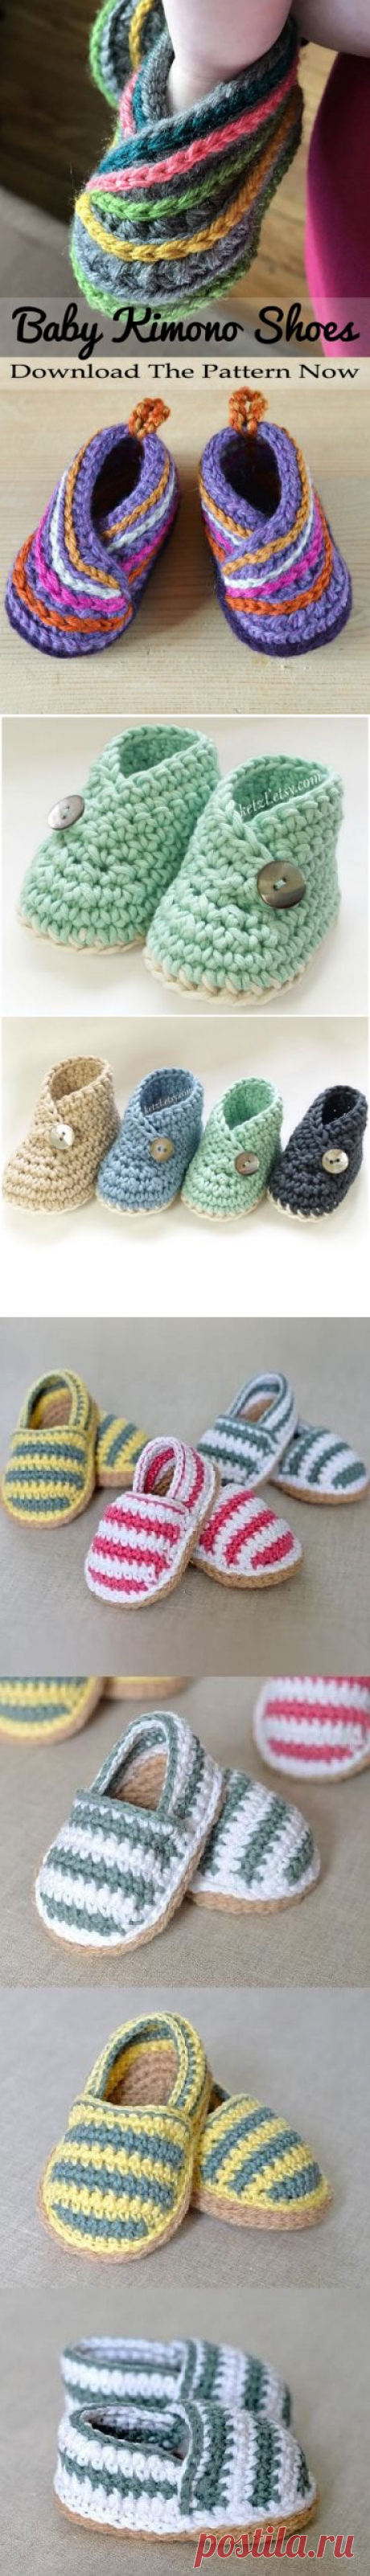 Crochet Kimono Baby Shoes Video Tutorial